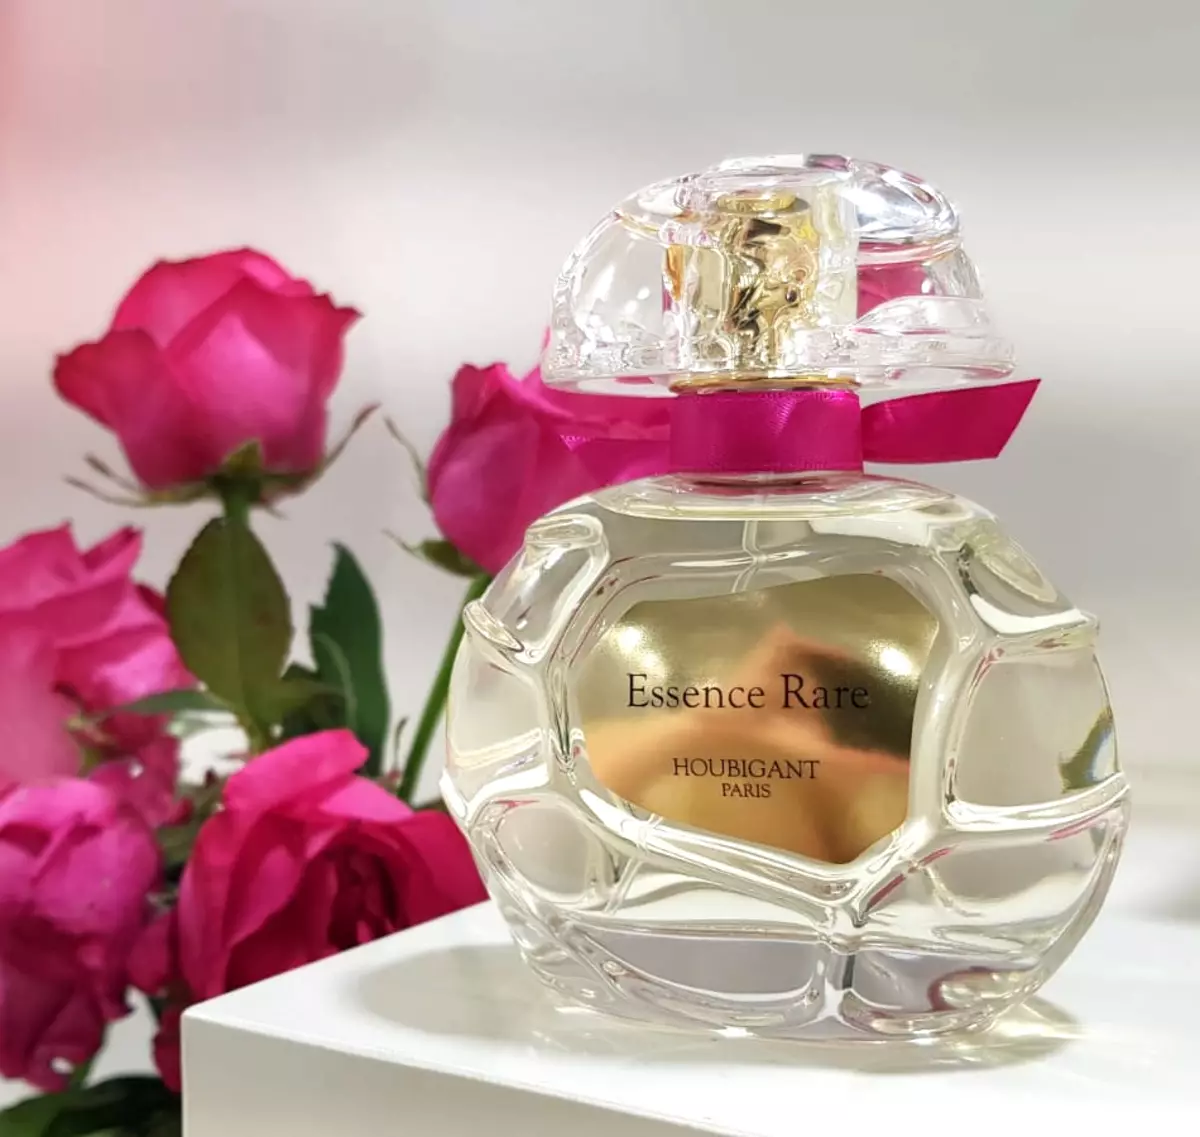 Houbigant парфем: Quelques го одвива ројал и суштината ретка, оргерс en Fleurs и iris des Champs, Fougere Royale и Cologne Intense, Apercu и други вкусови 25165_3